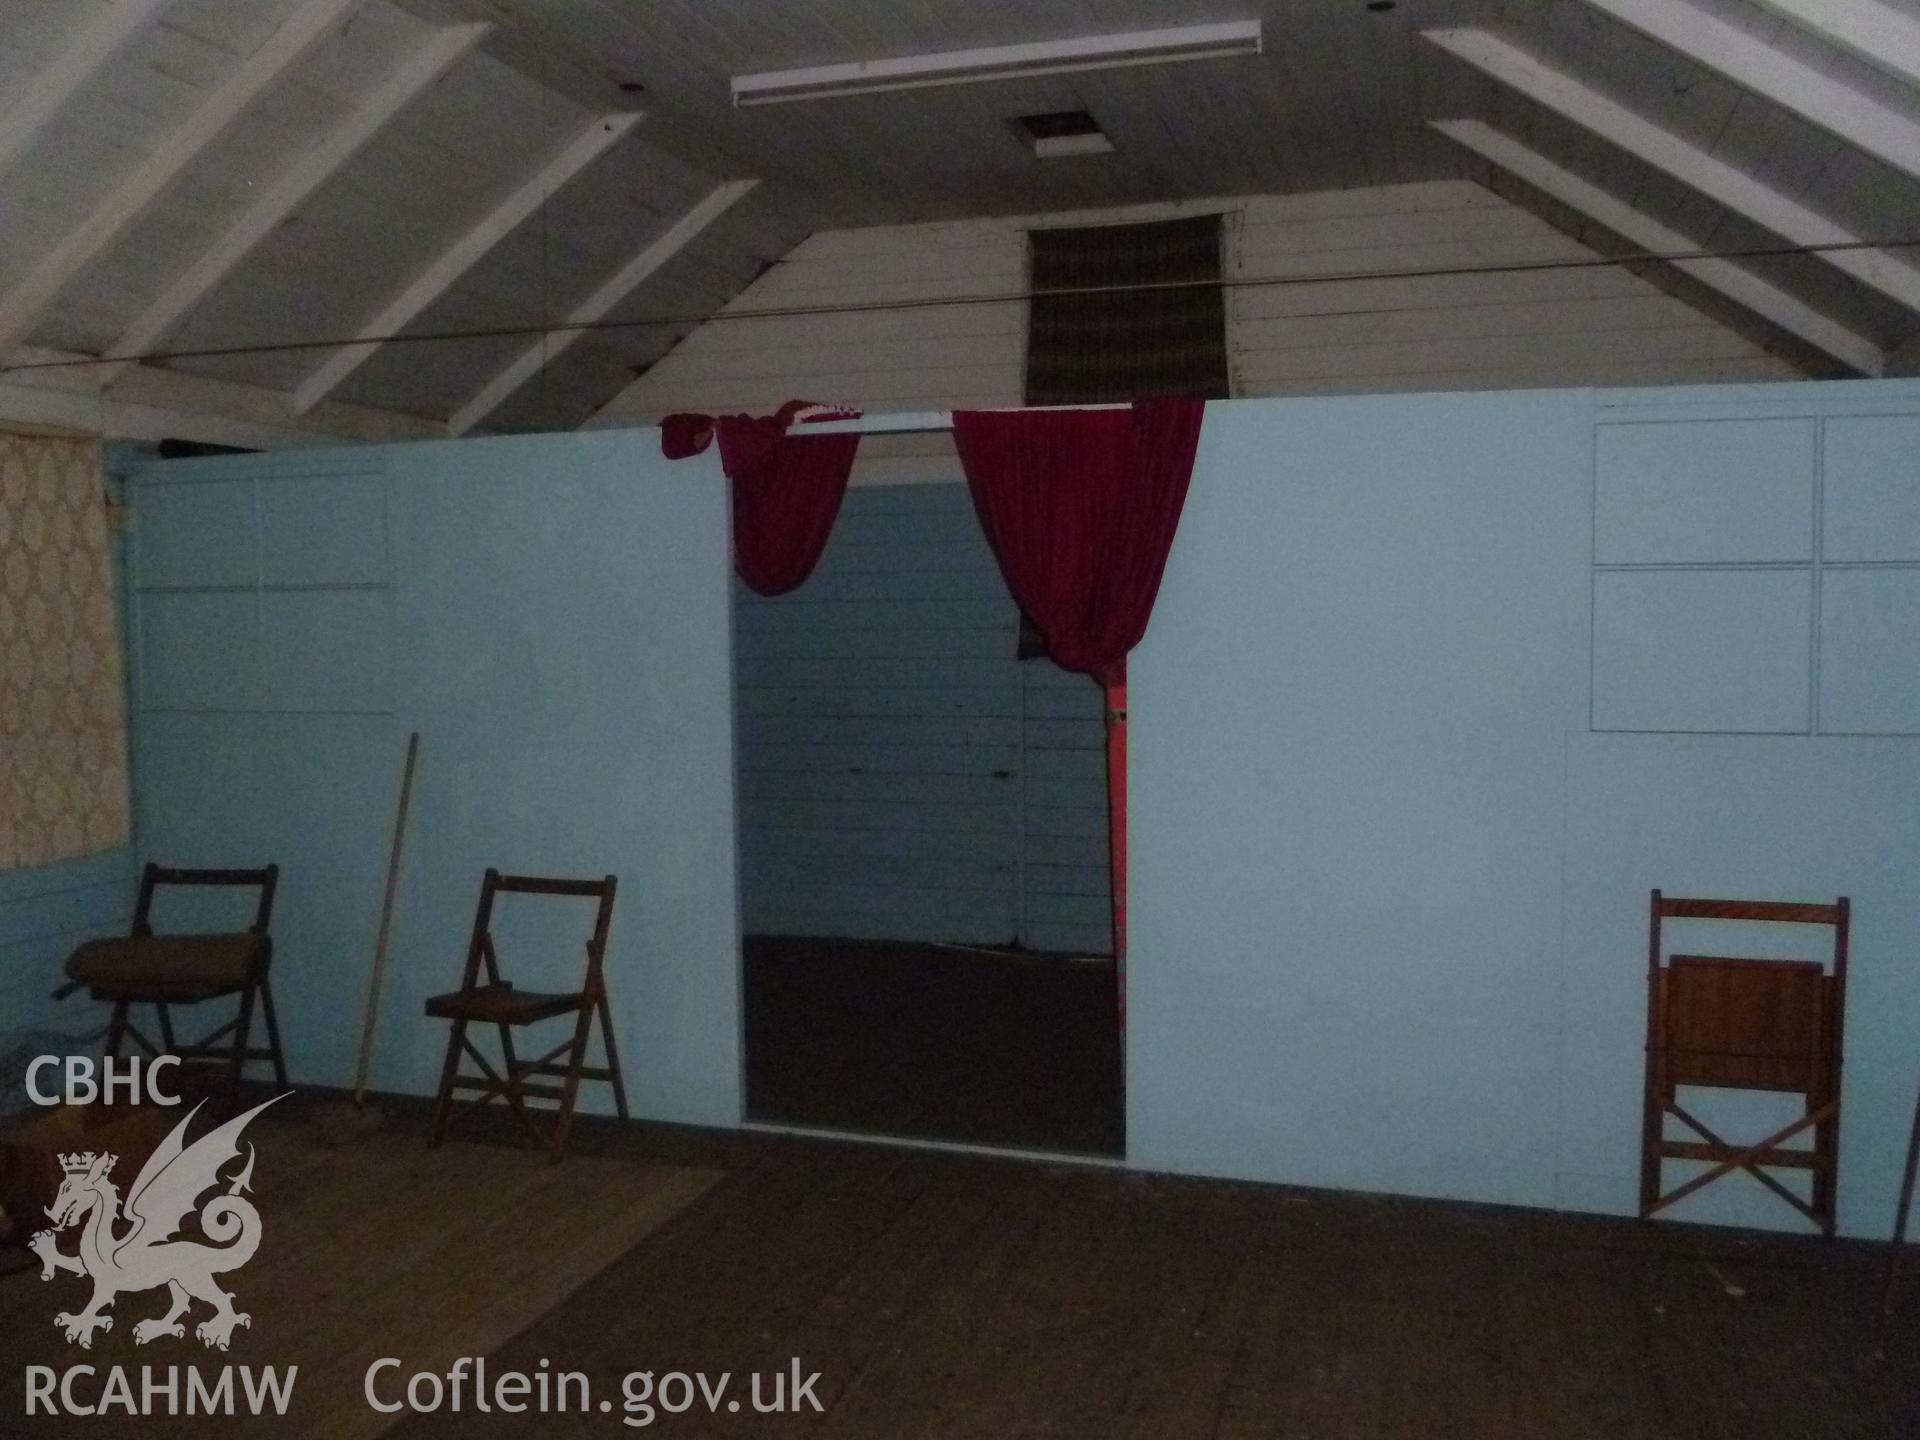 Digital image relating to Ebenezer Chapel Vestry, Goodwick, Pembrokeshire: interior.